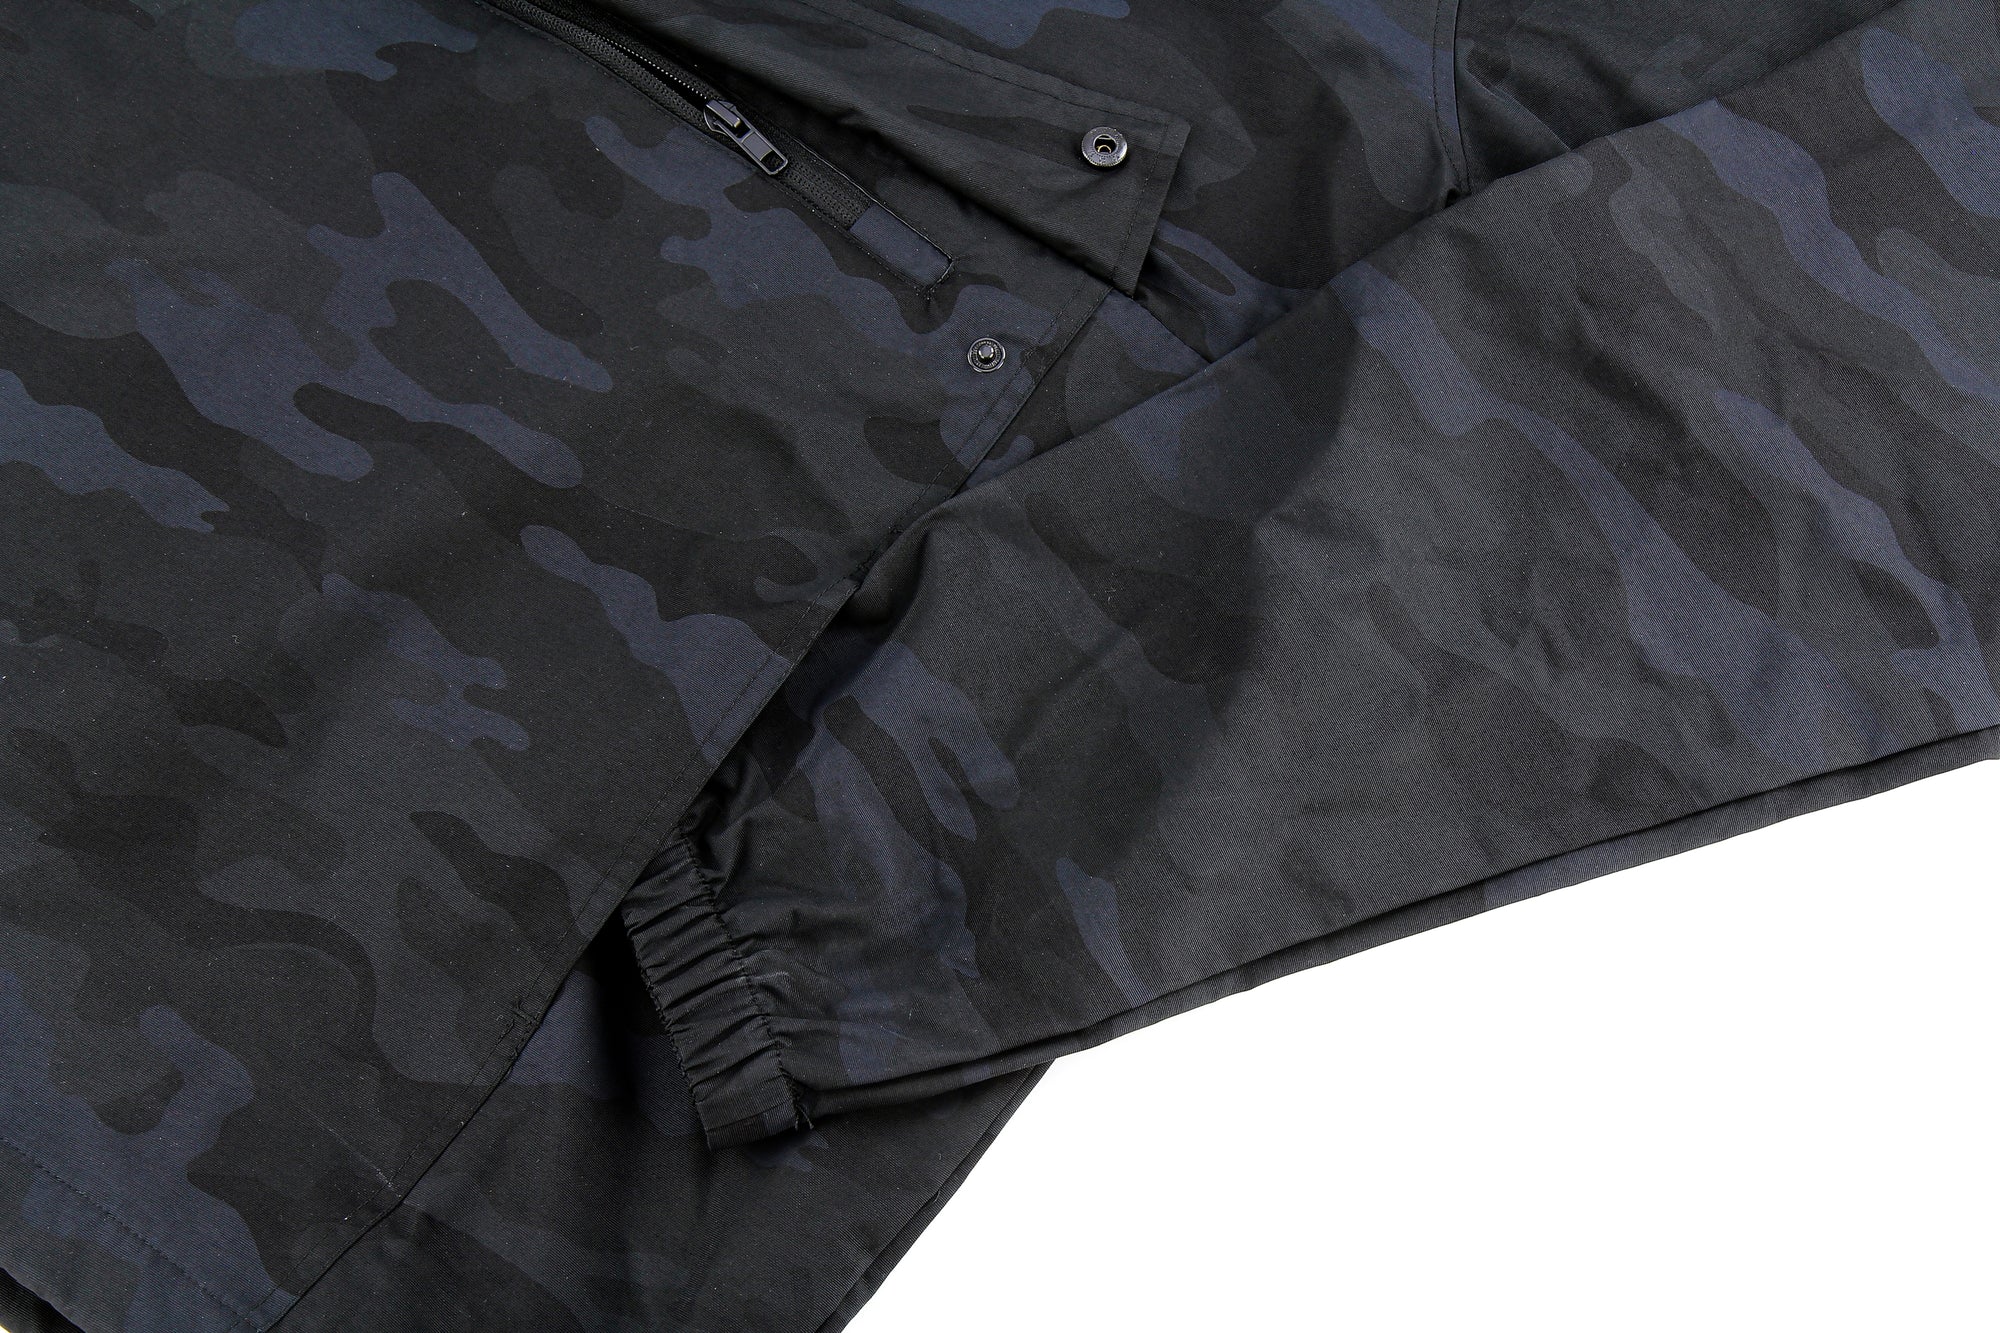 HPS Performance Black Camo Anorak Jacket